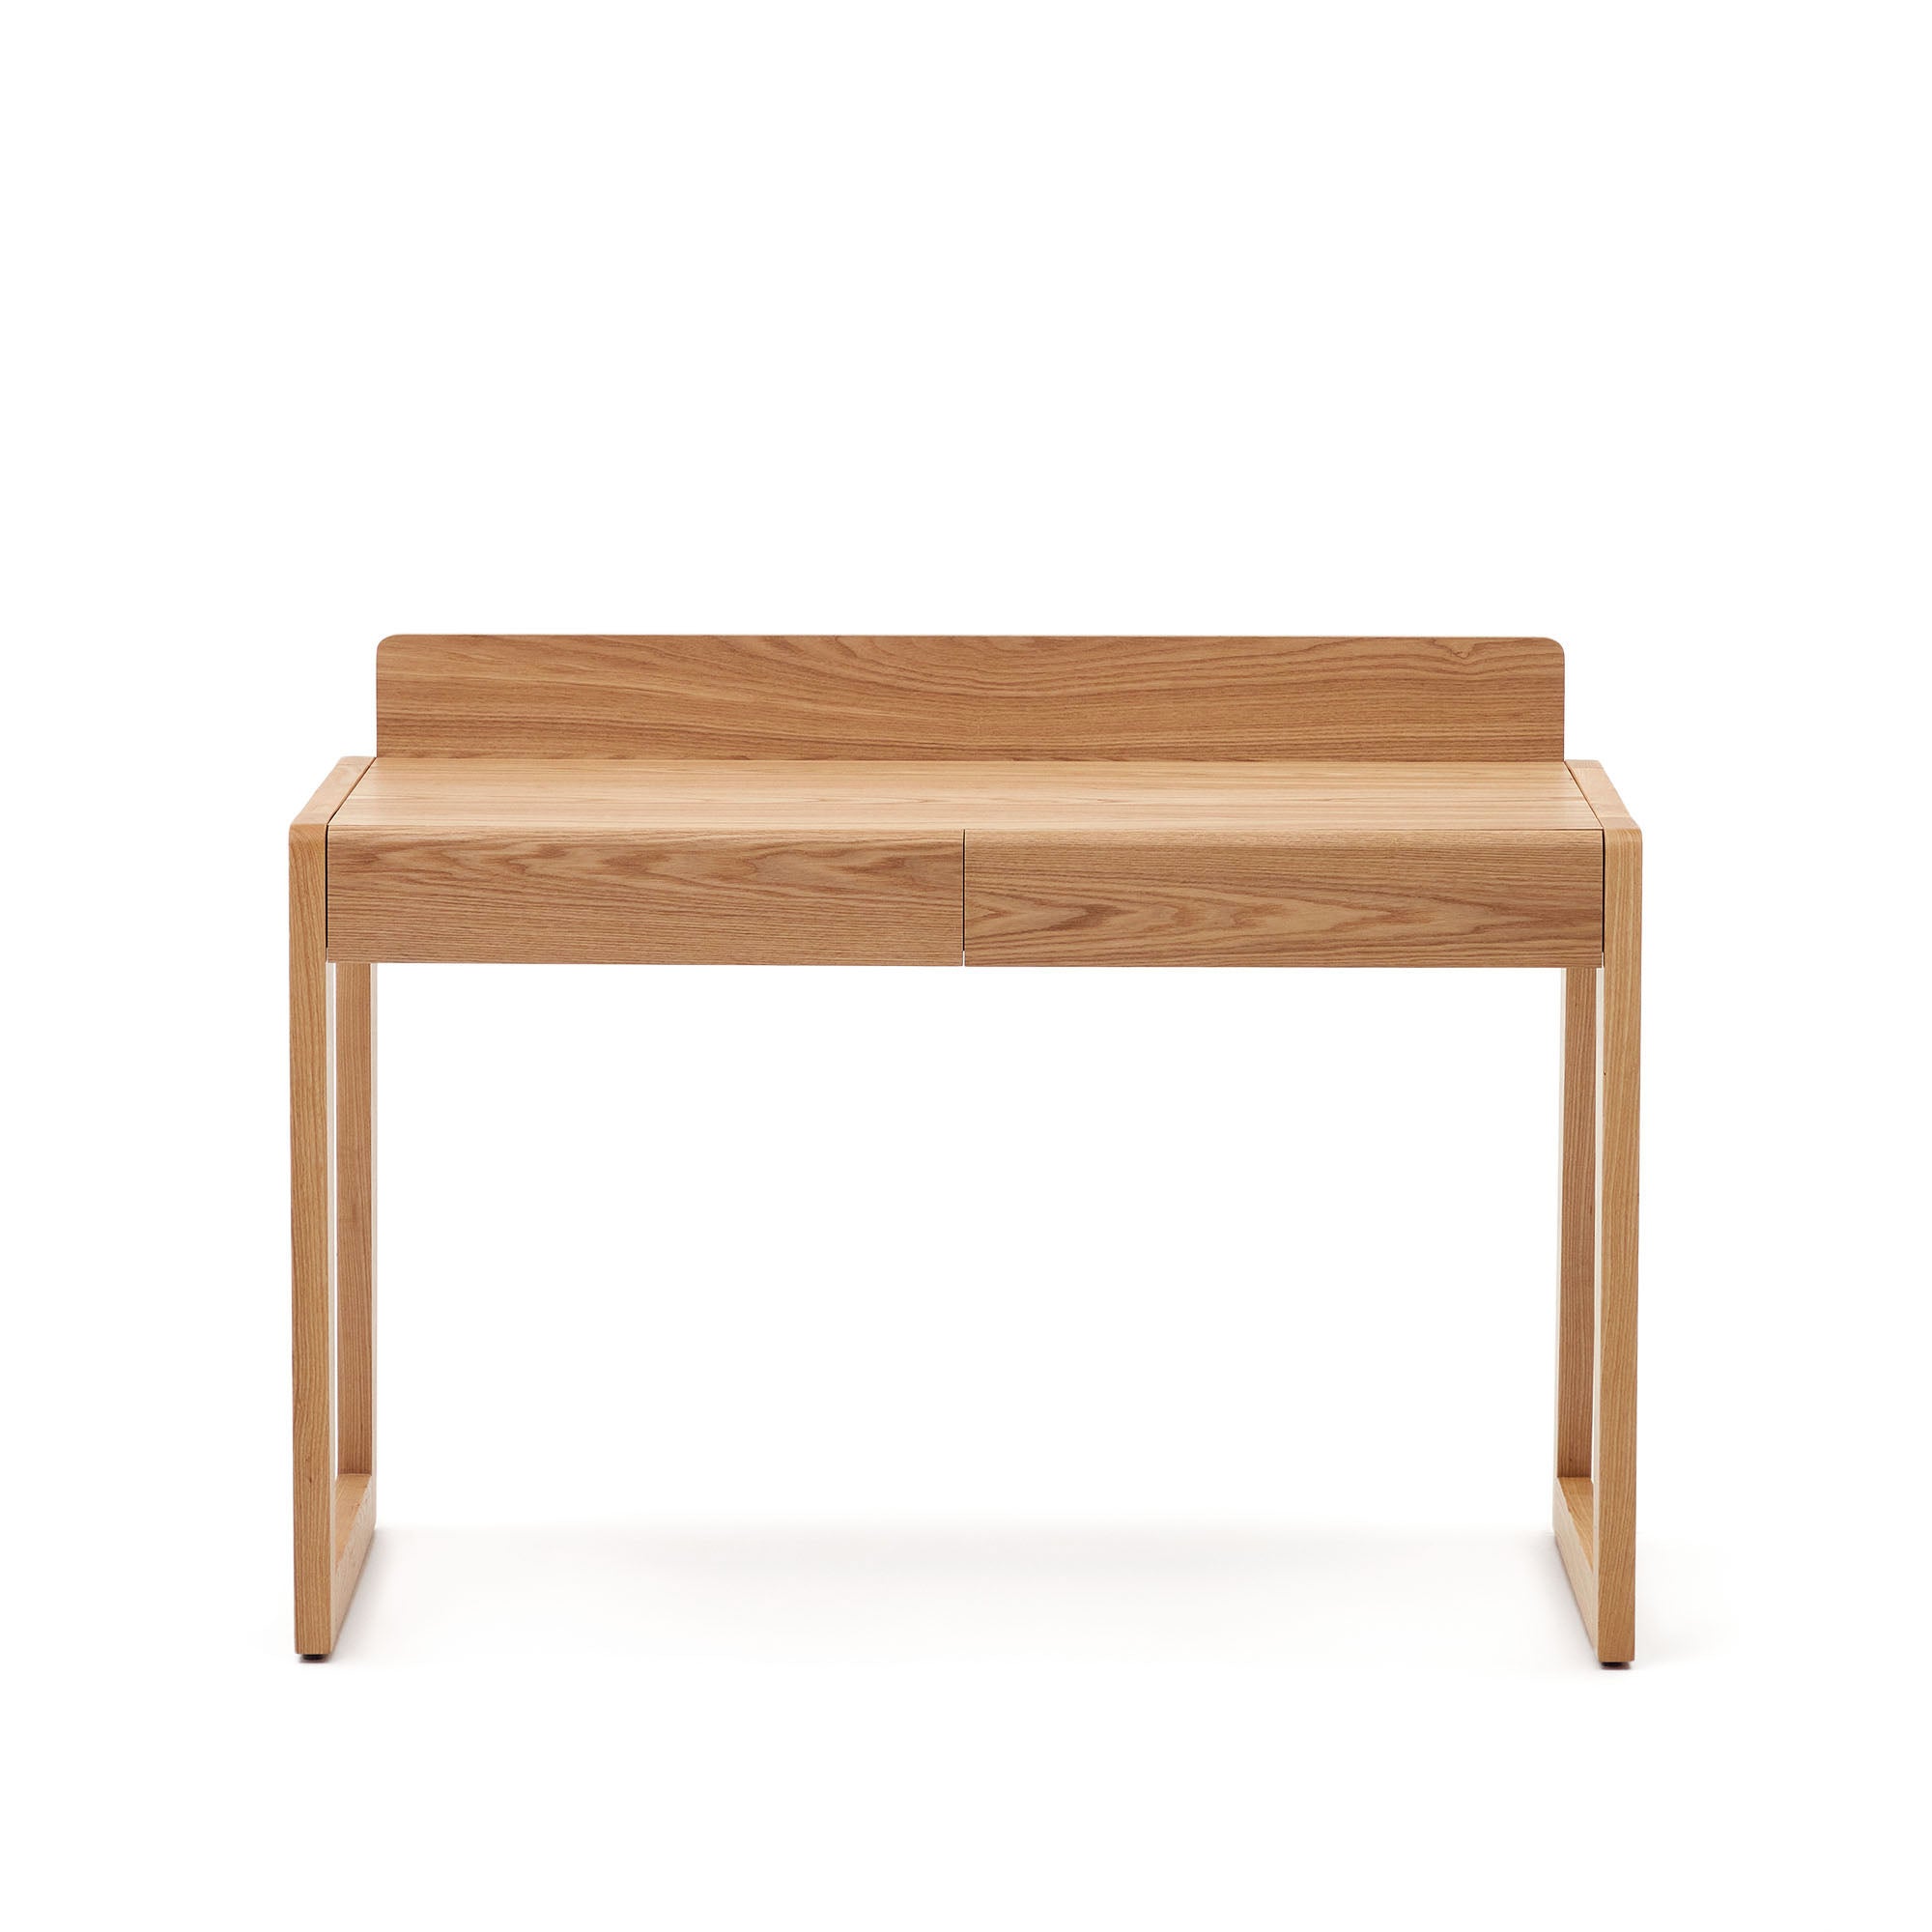 Arandu desk in solid ash veneer and wood 120 x 60 cm